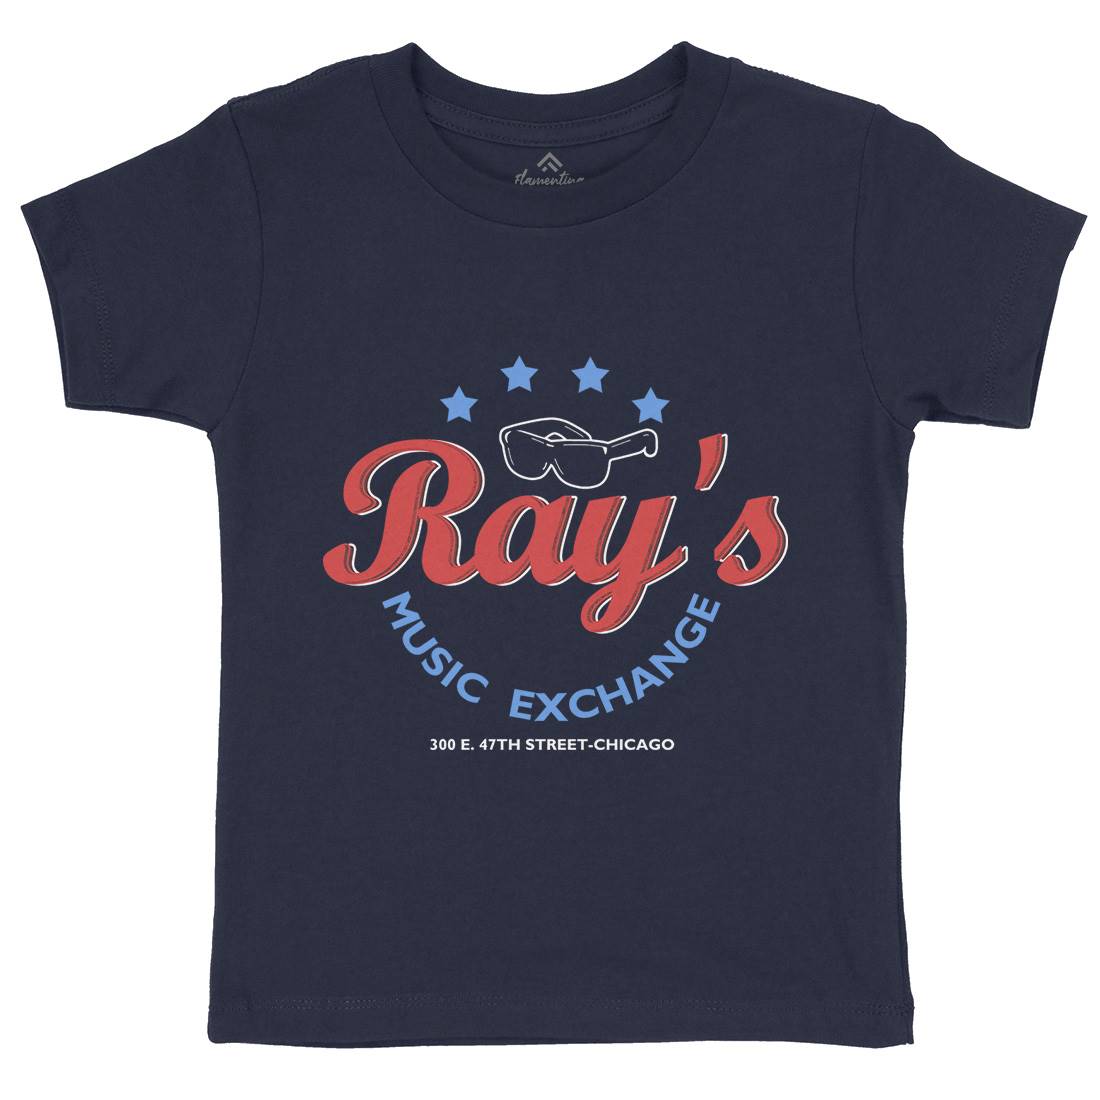 Rays Music Exchange Kids Crew Neck T-Shirt Music D380